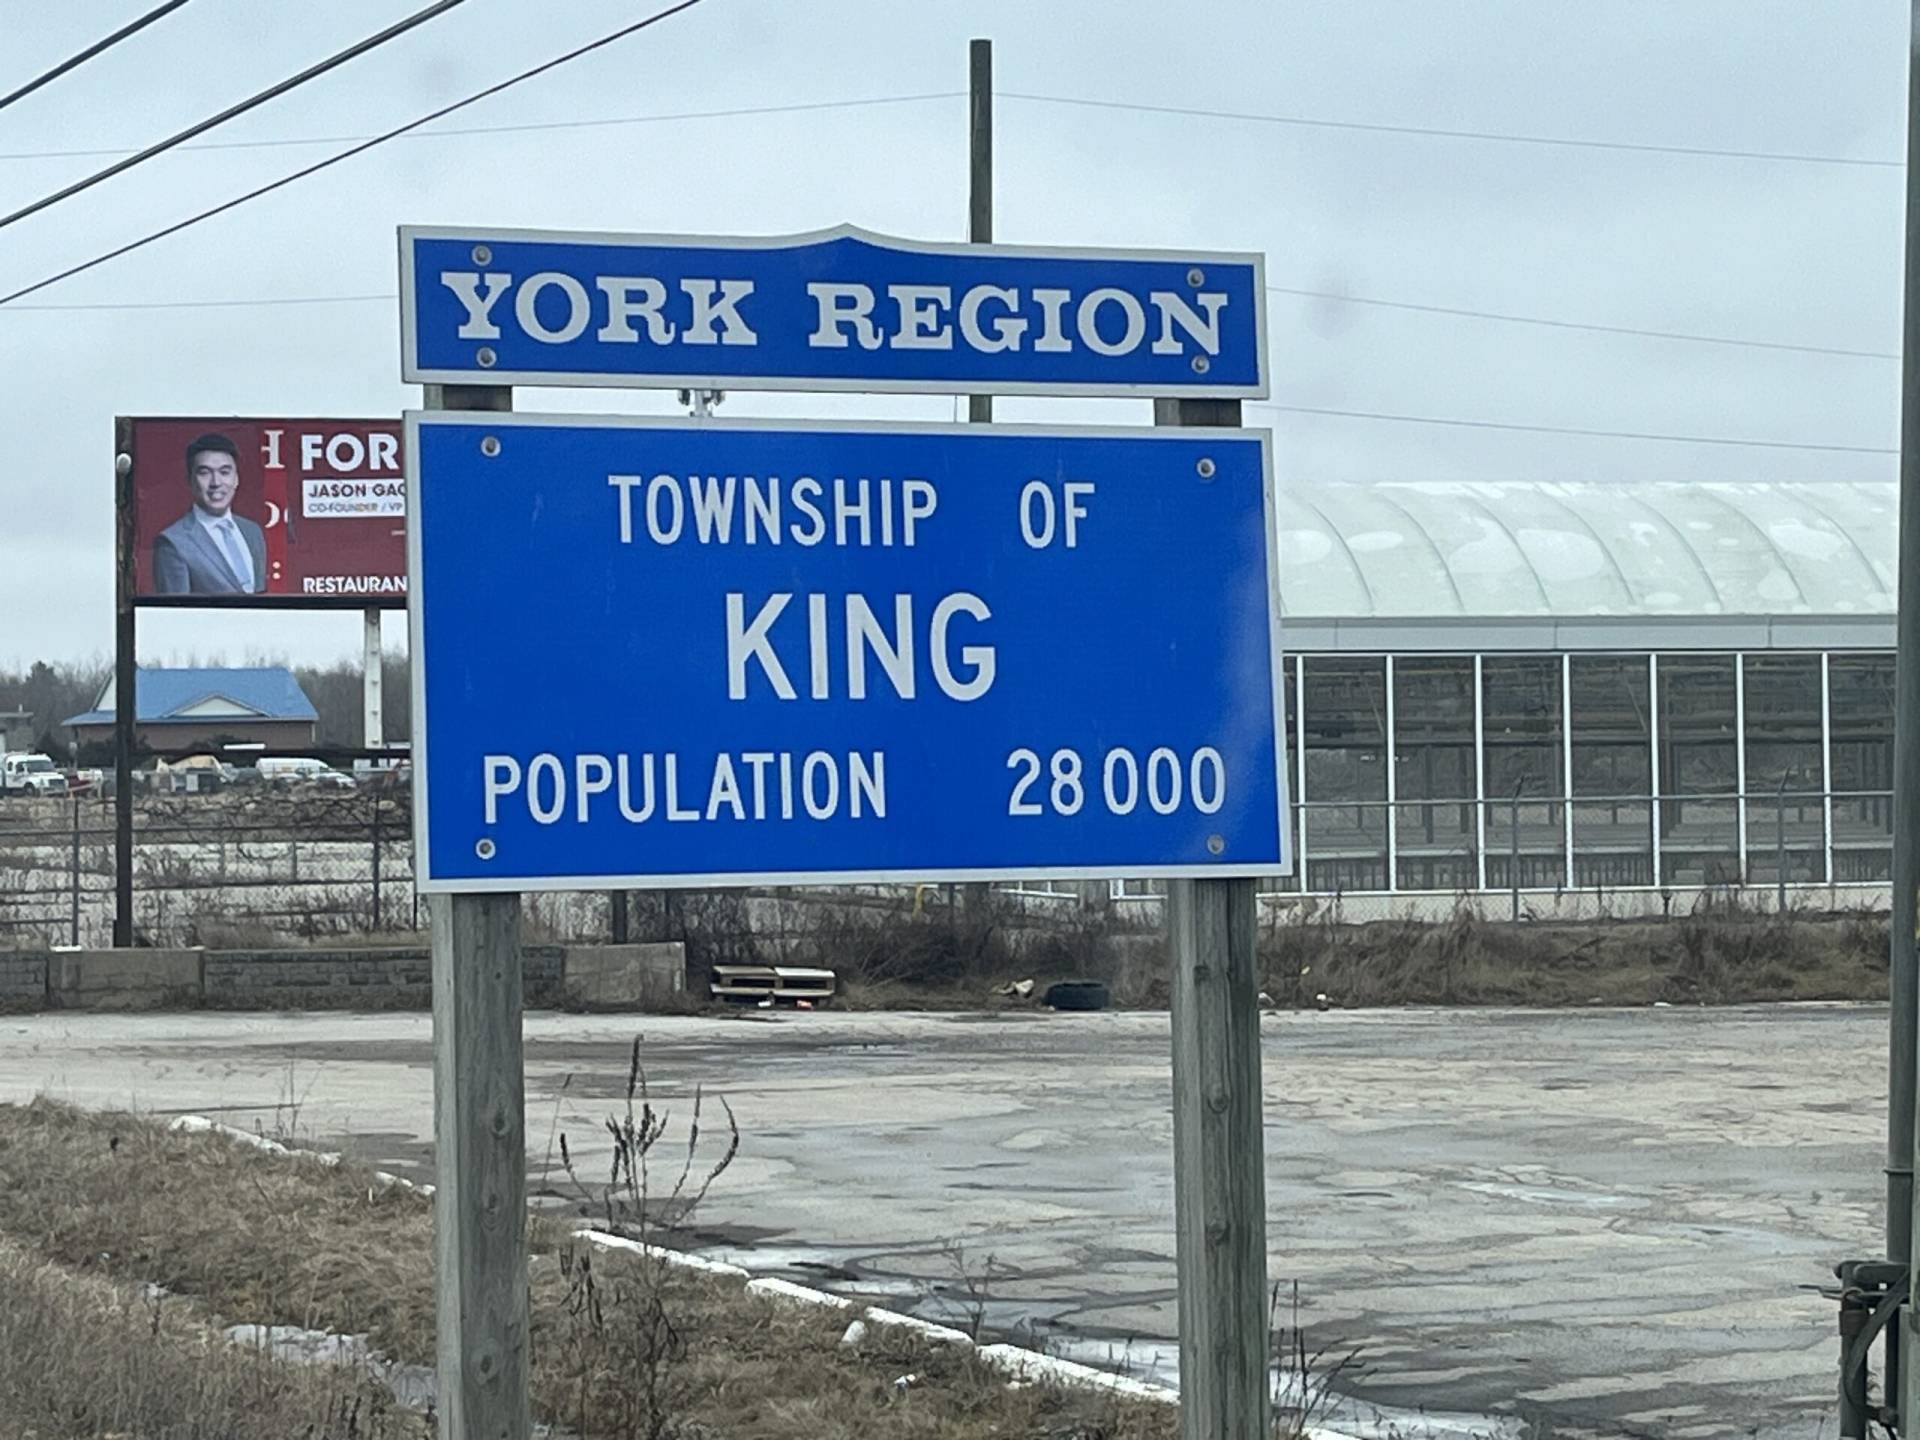 King, York Region sign board view